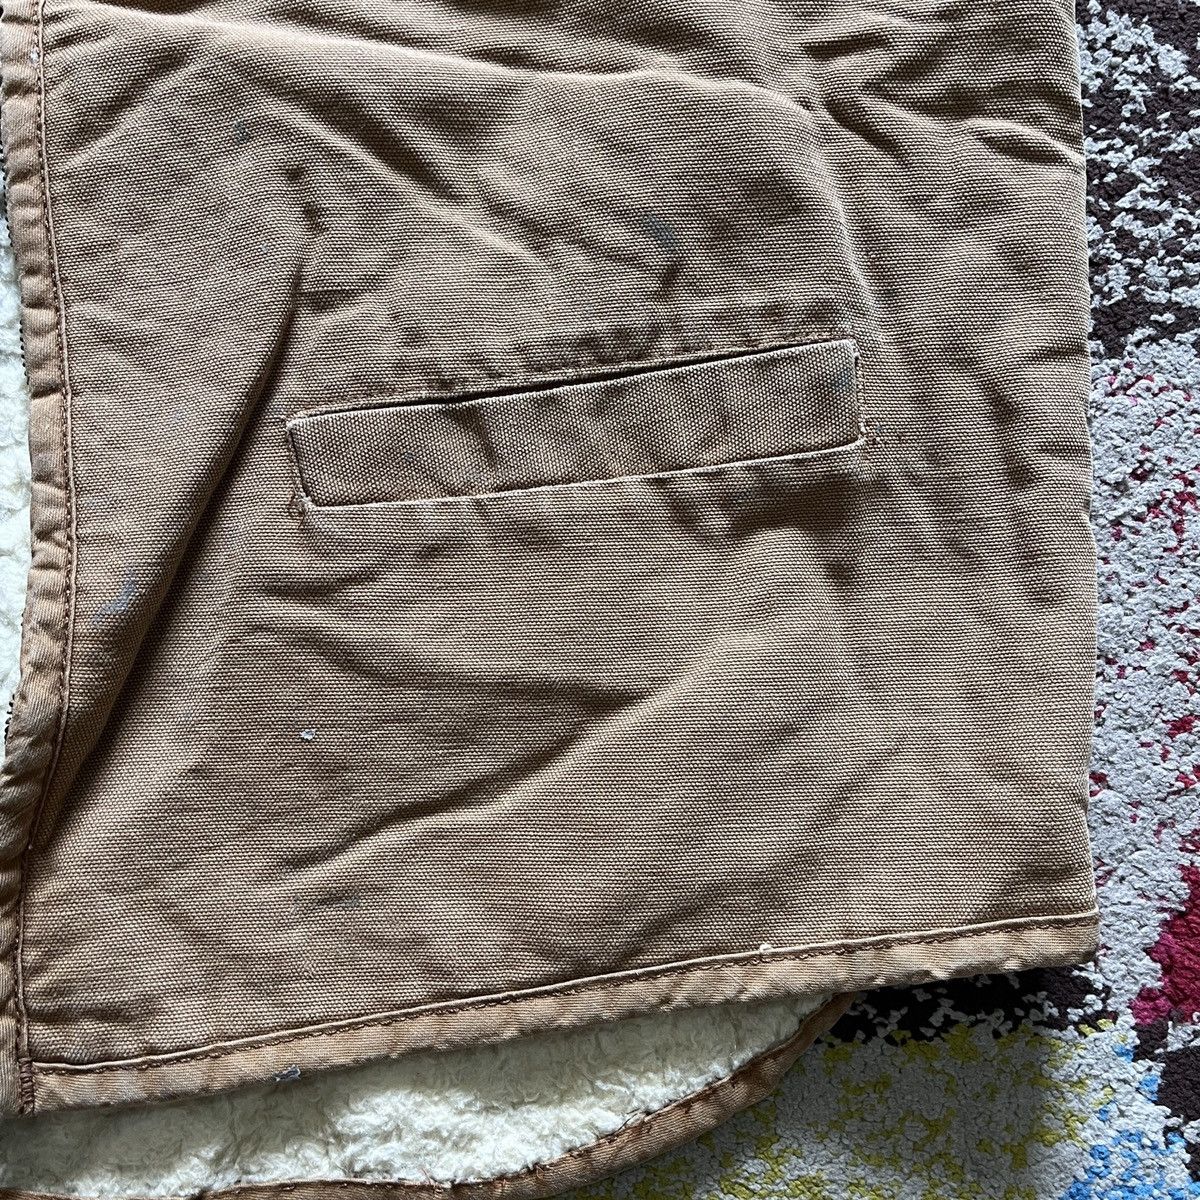 Carhartt Vest Denim 1980s Vintage Blanket - 5